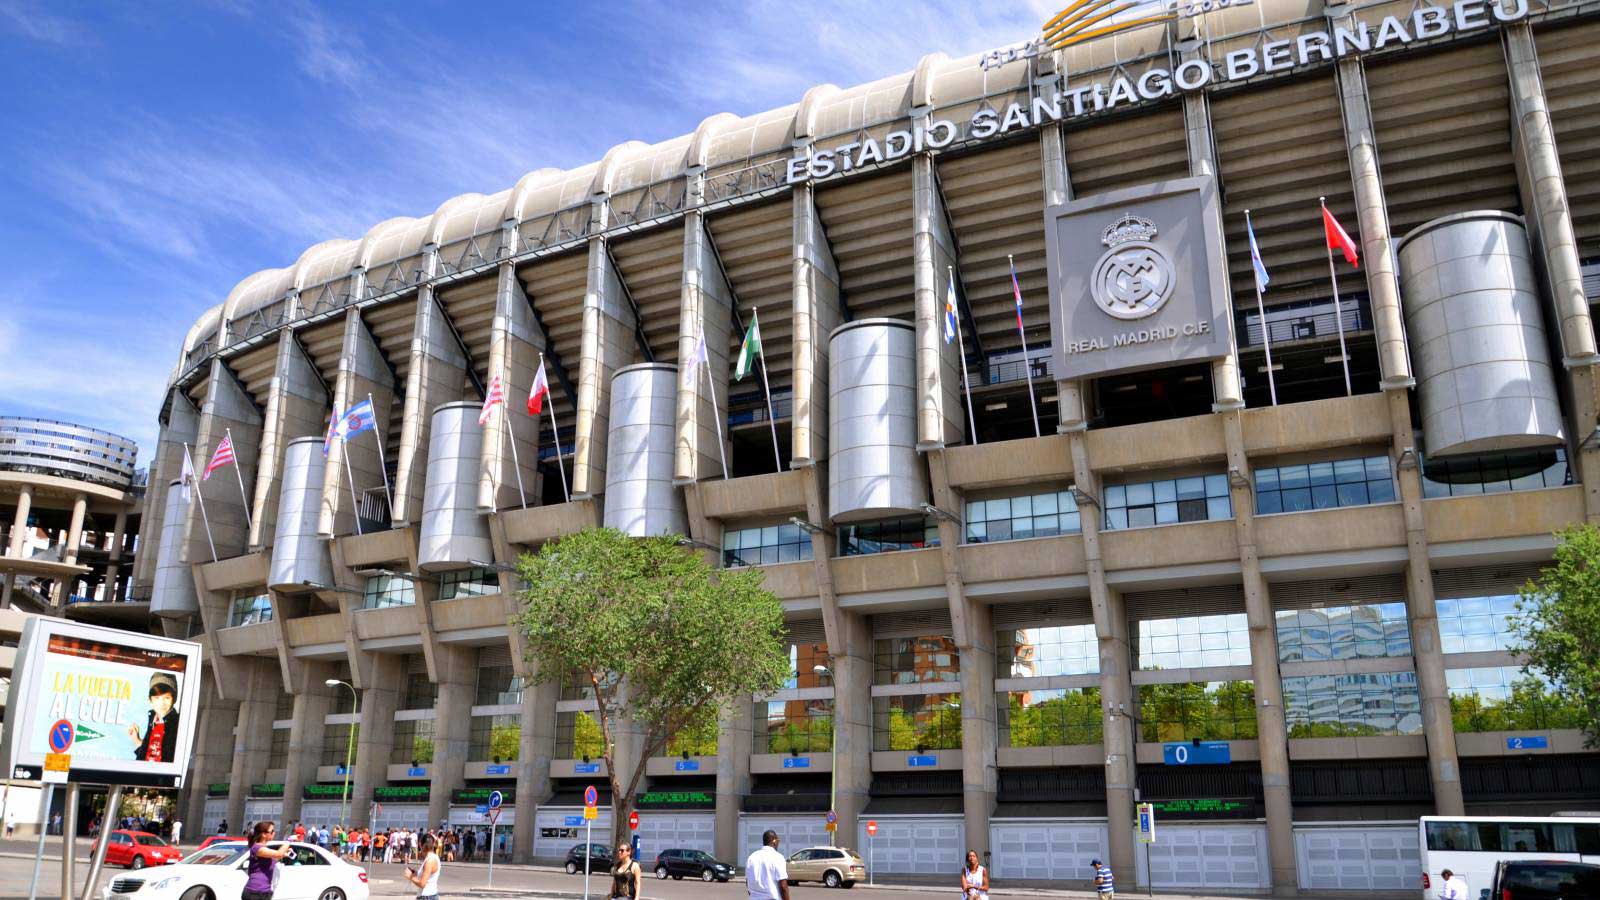 Estadio Santiago Bernabeu, Madrid